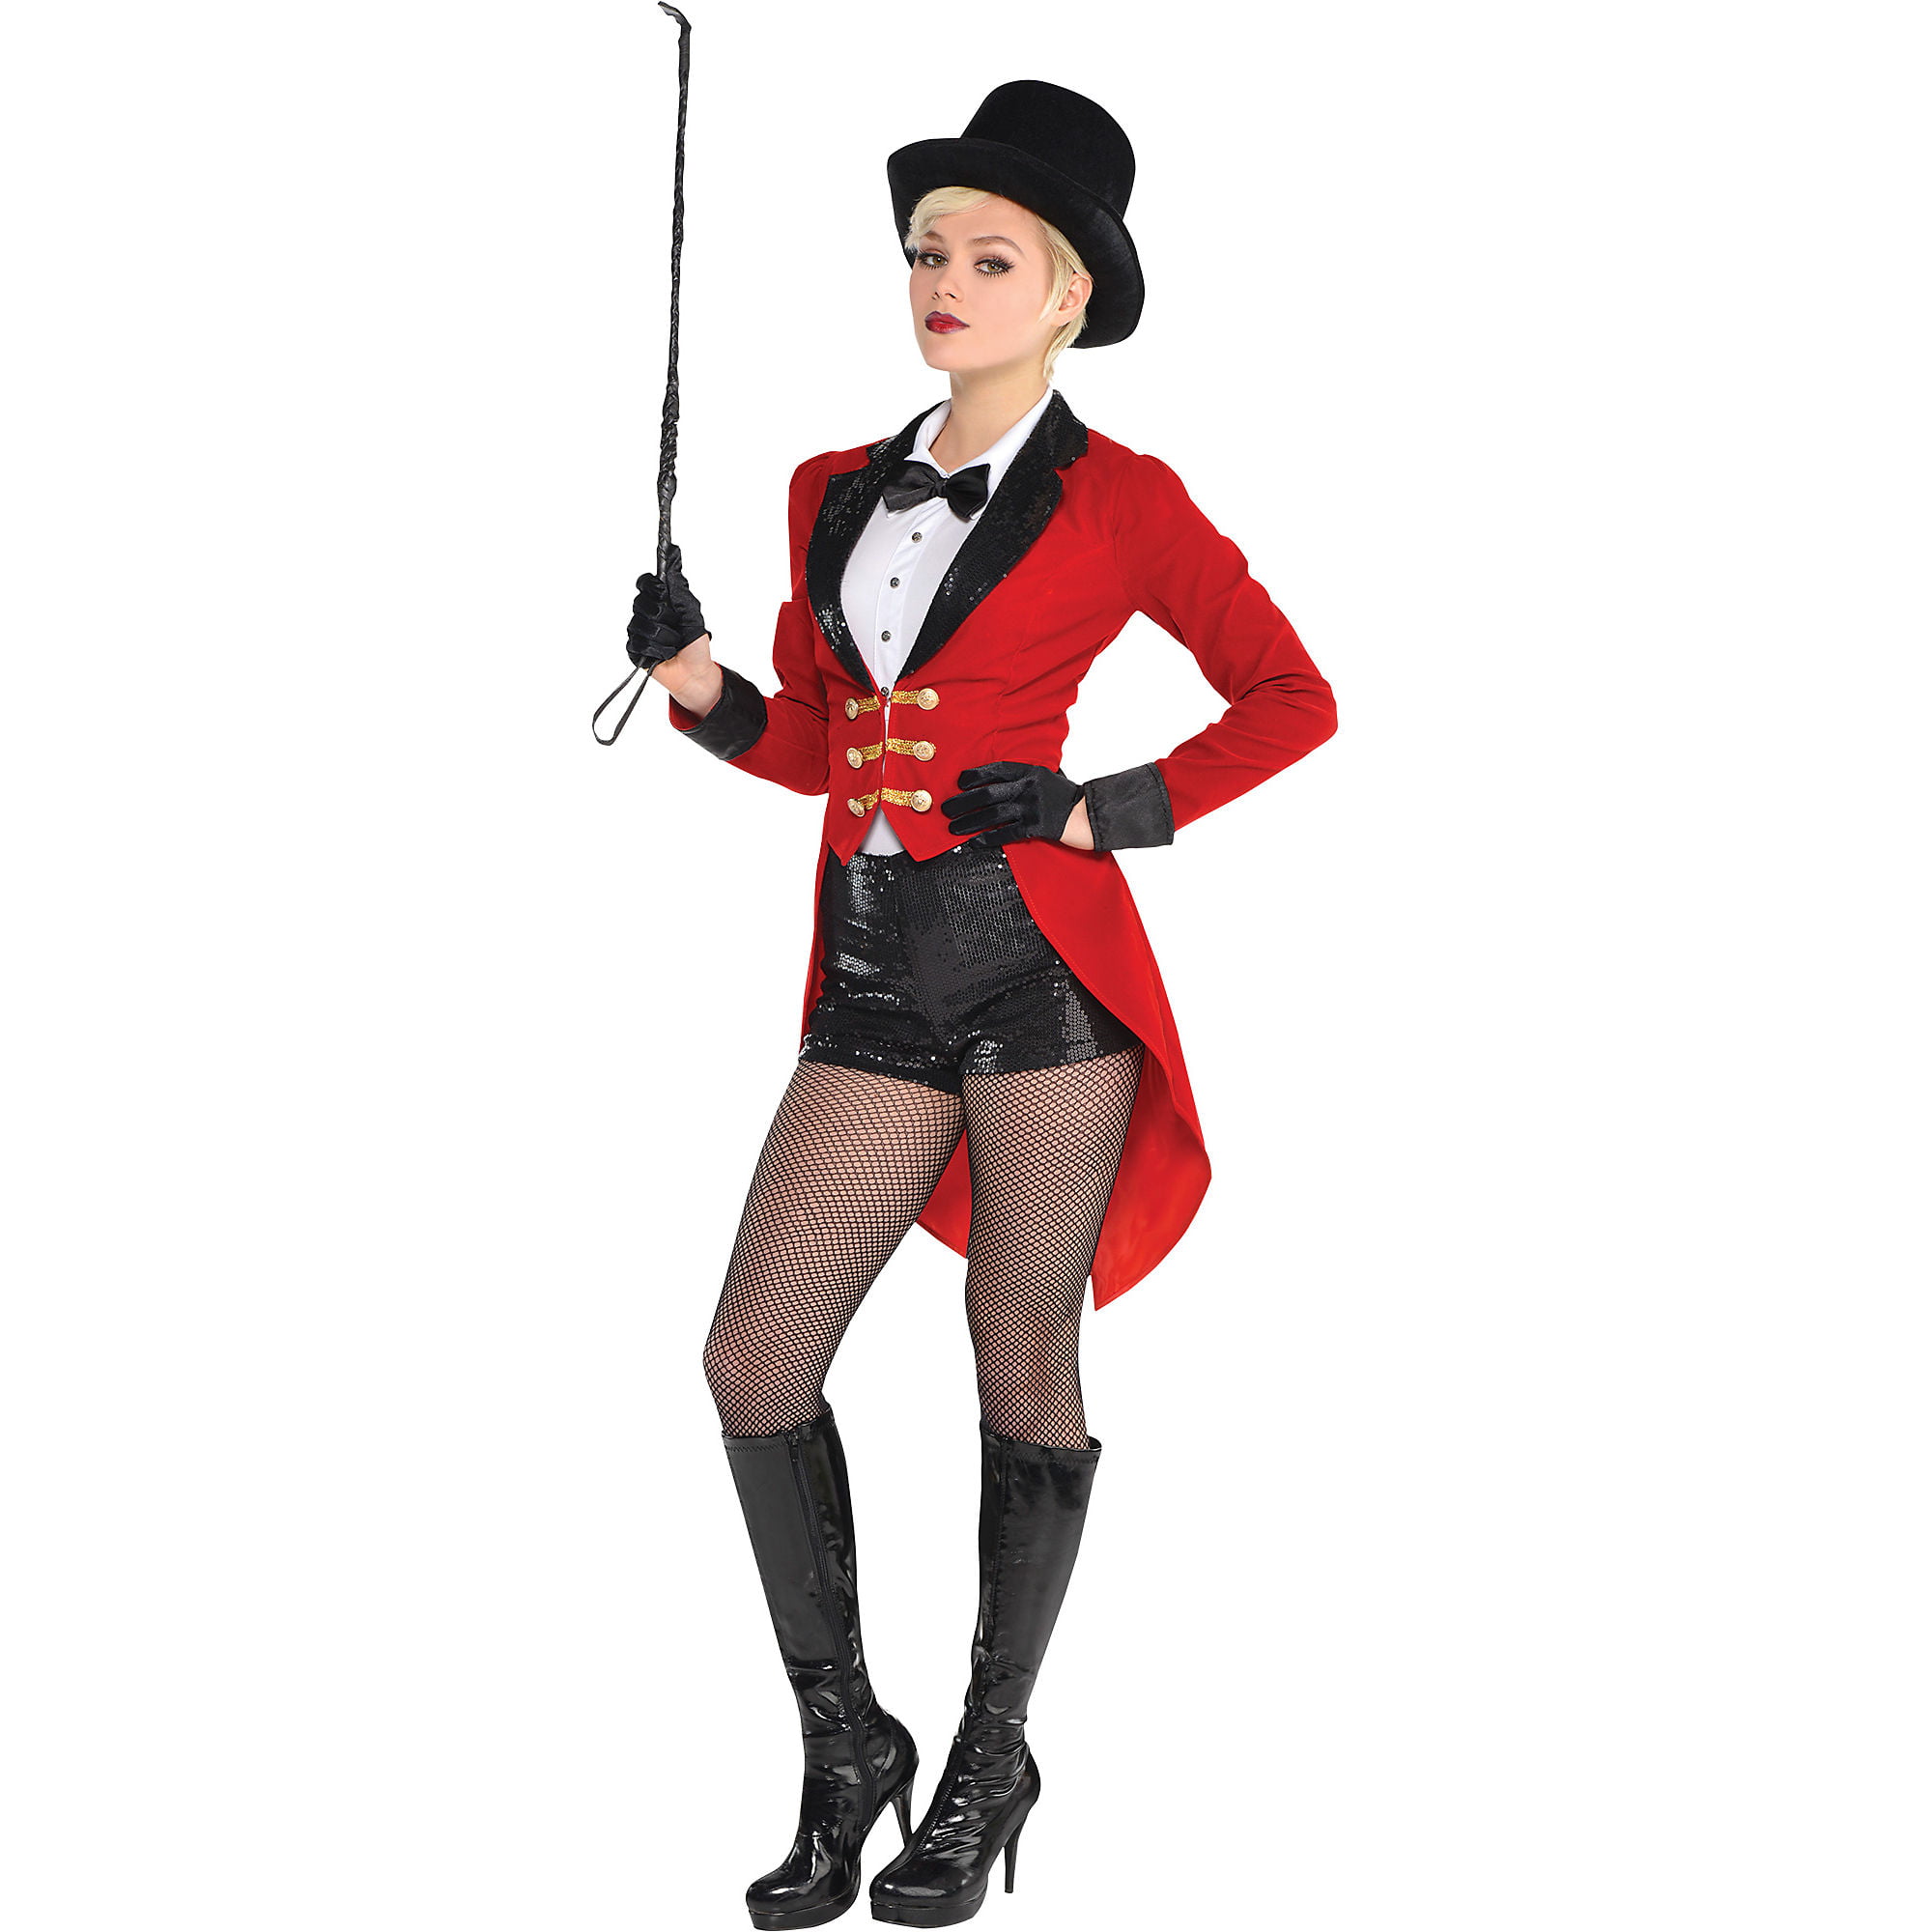 Ringmaster tutu dress,circus fancy dress,ring leader outfit international seller circus party dress red and black tutu dress